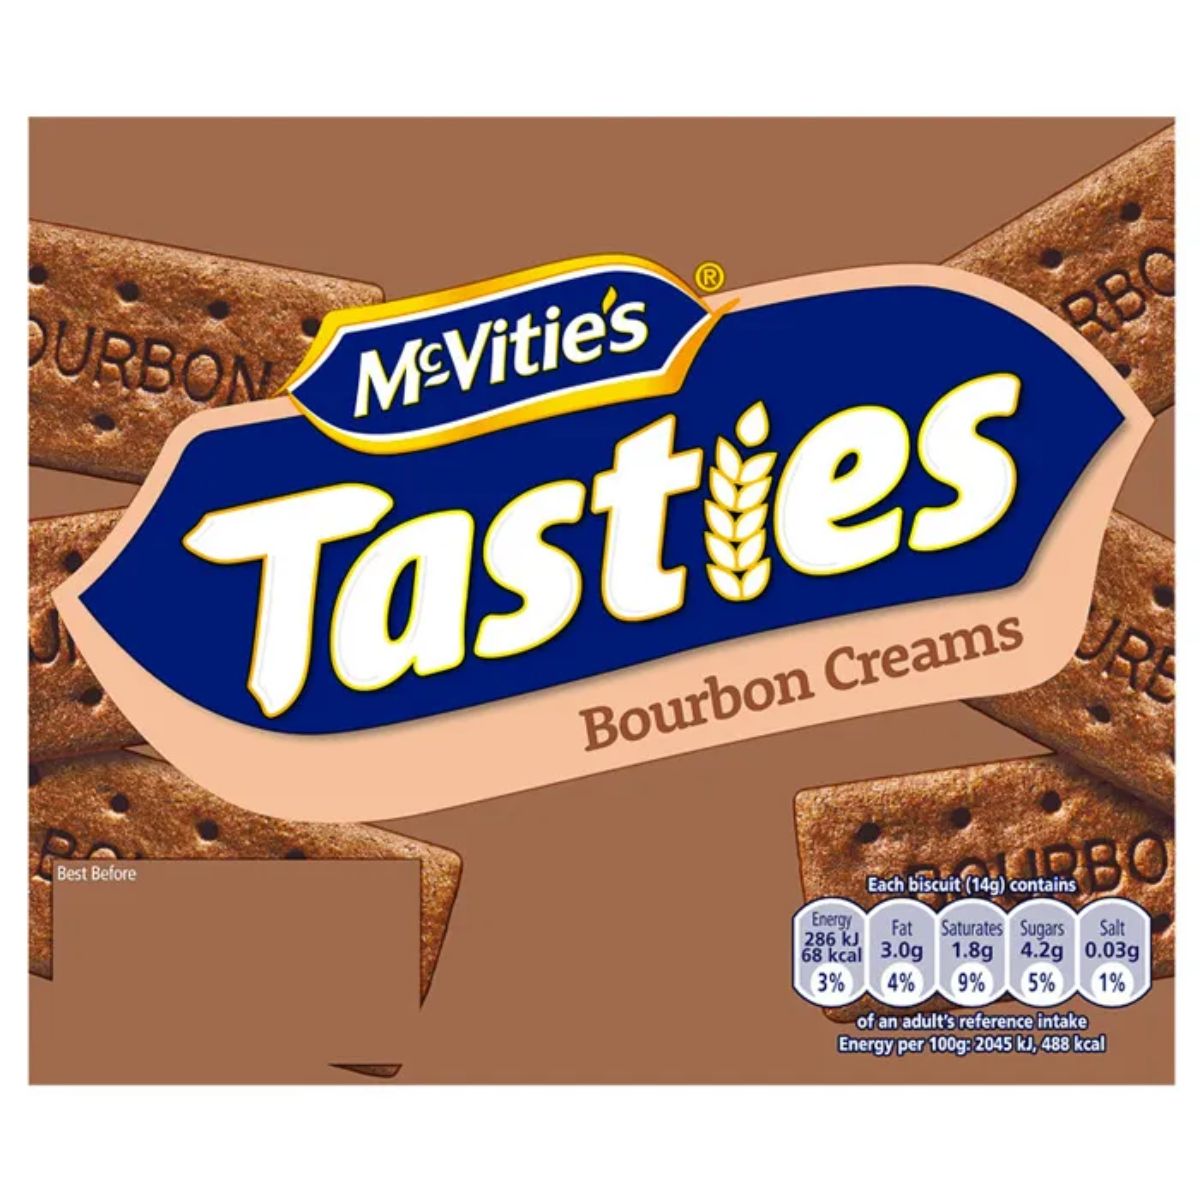 My McVities - Bourbon Cream Biscuits - 300g tastes bourbon creams.